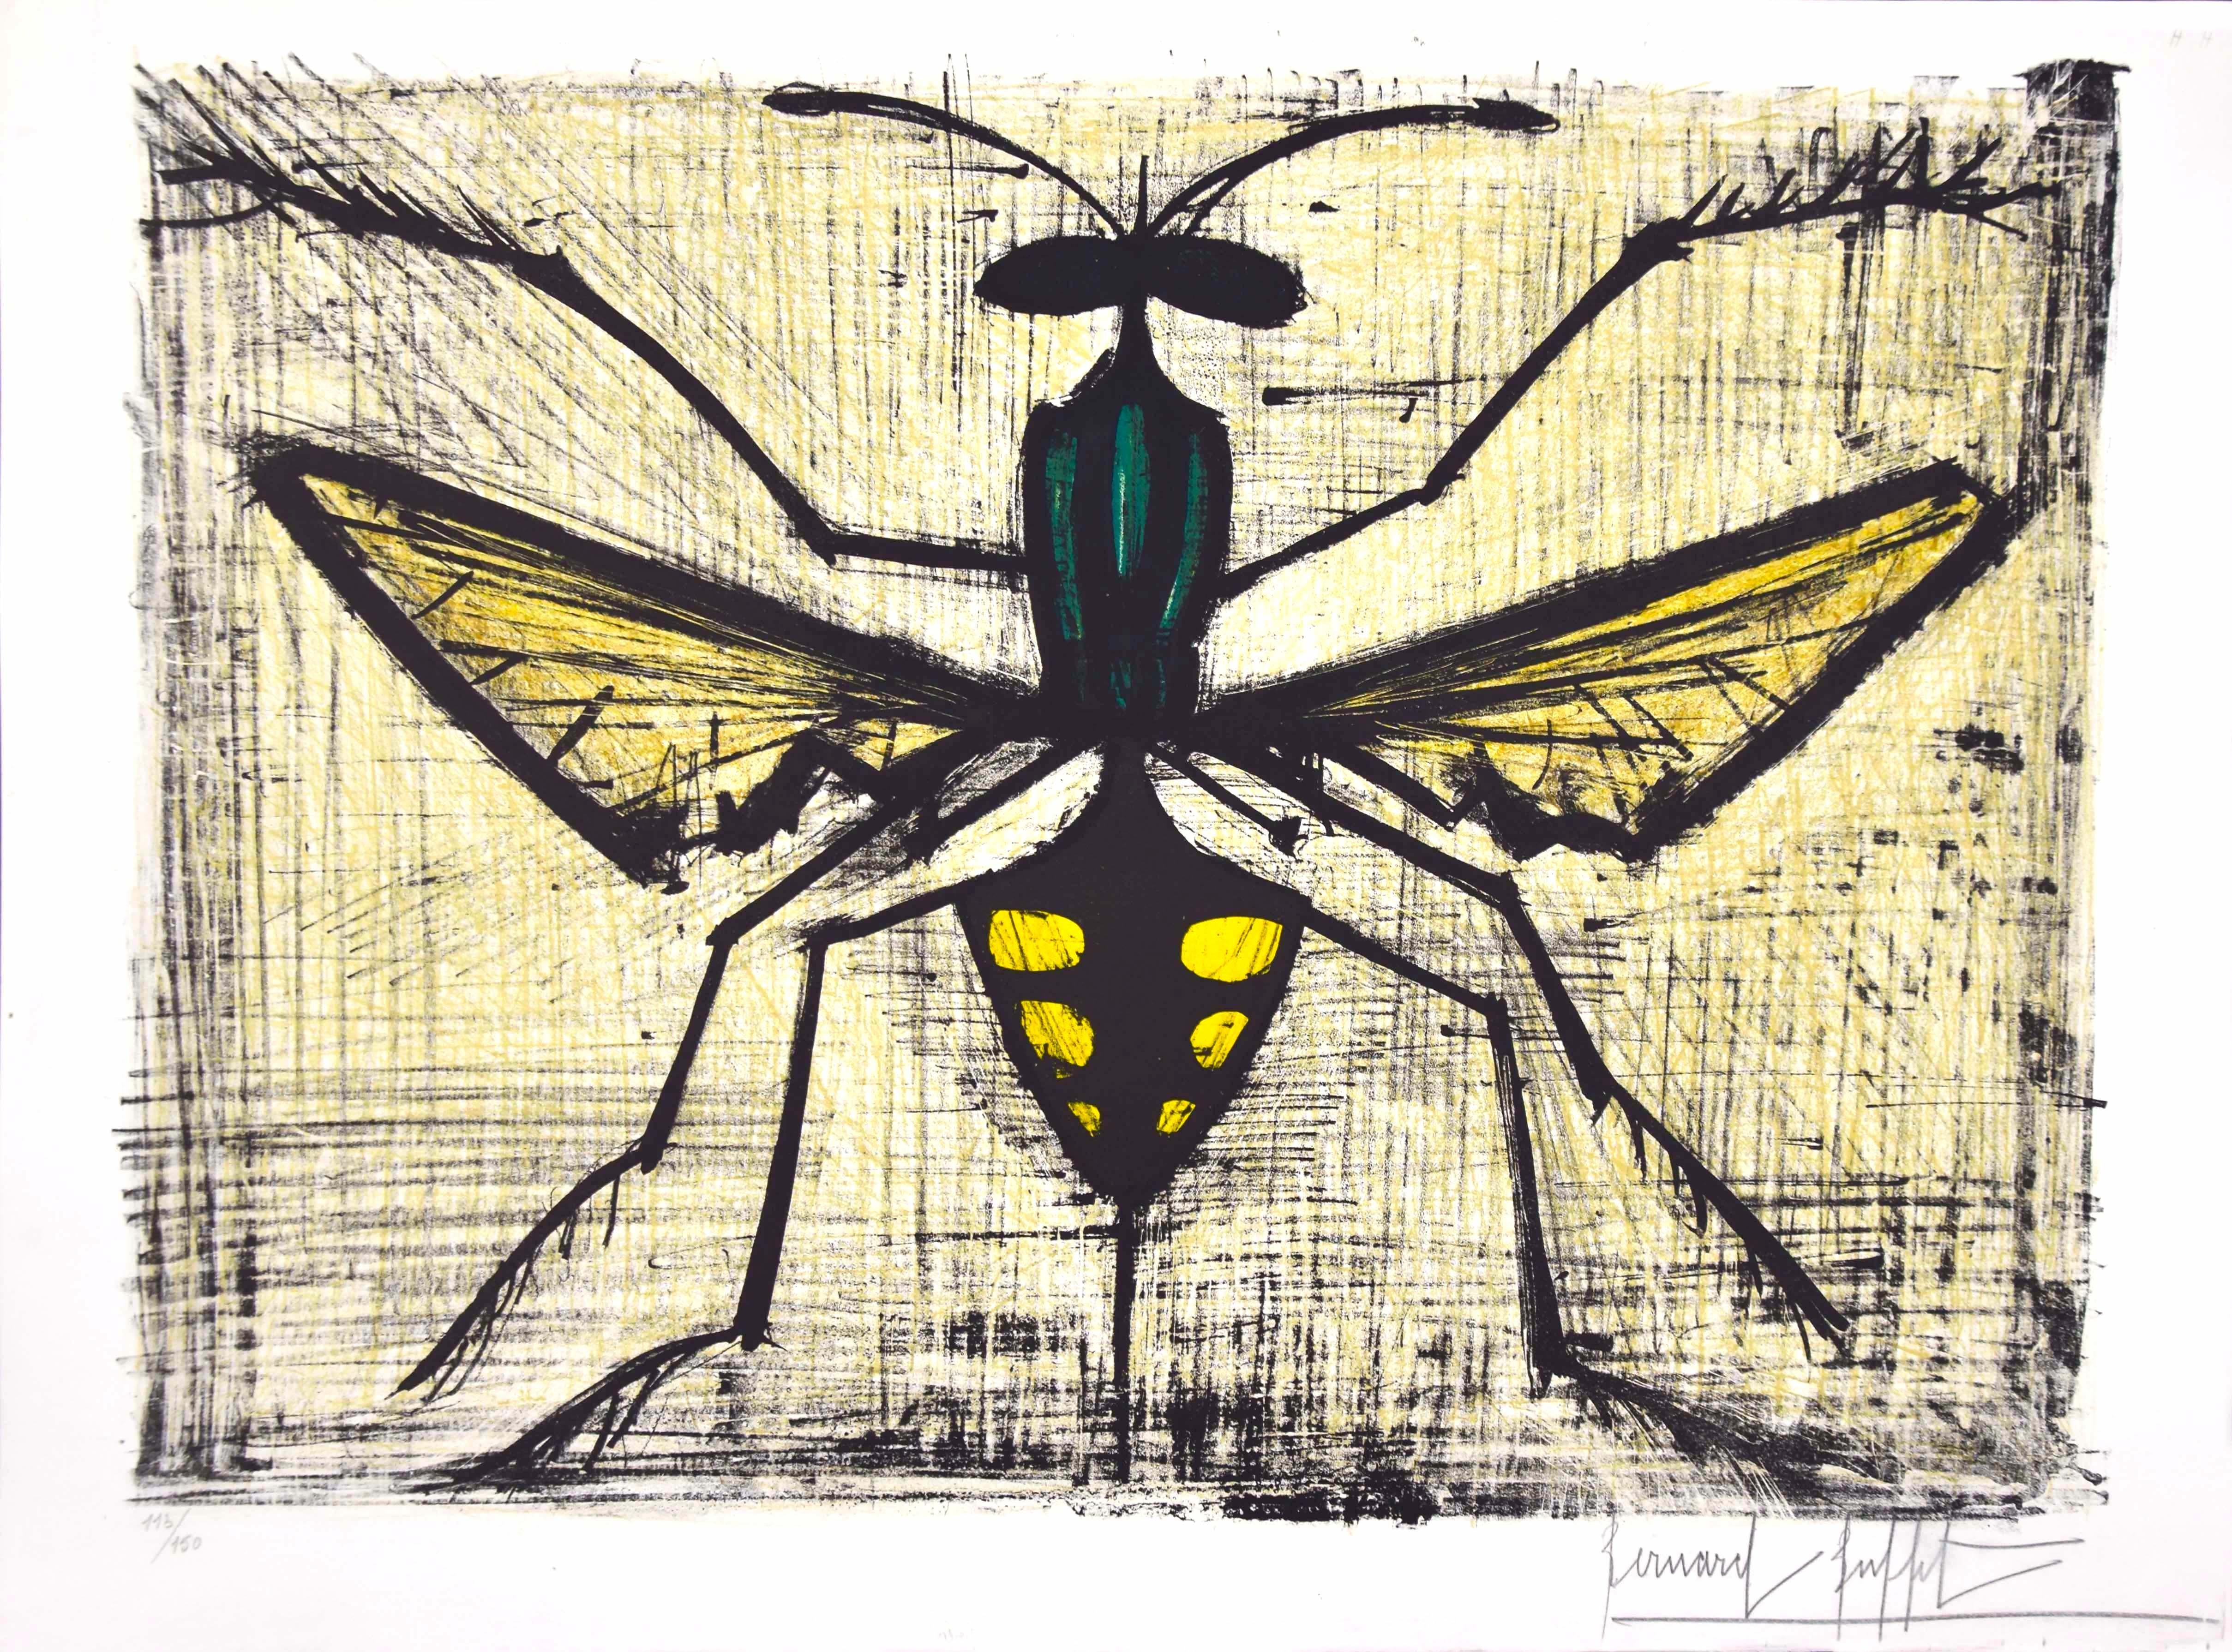 Bernard Buffet Figurative Print - Mosquito - Original Lithograph from "Les Insectes", by B. Buffet - 1967